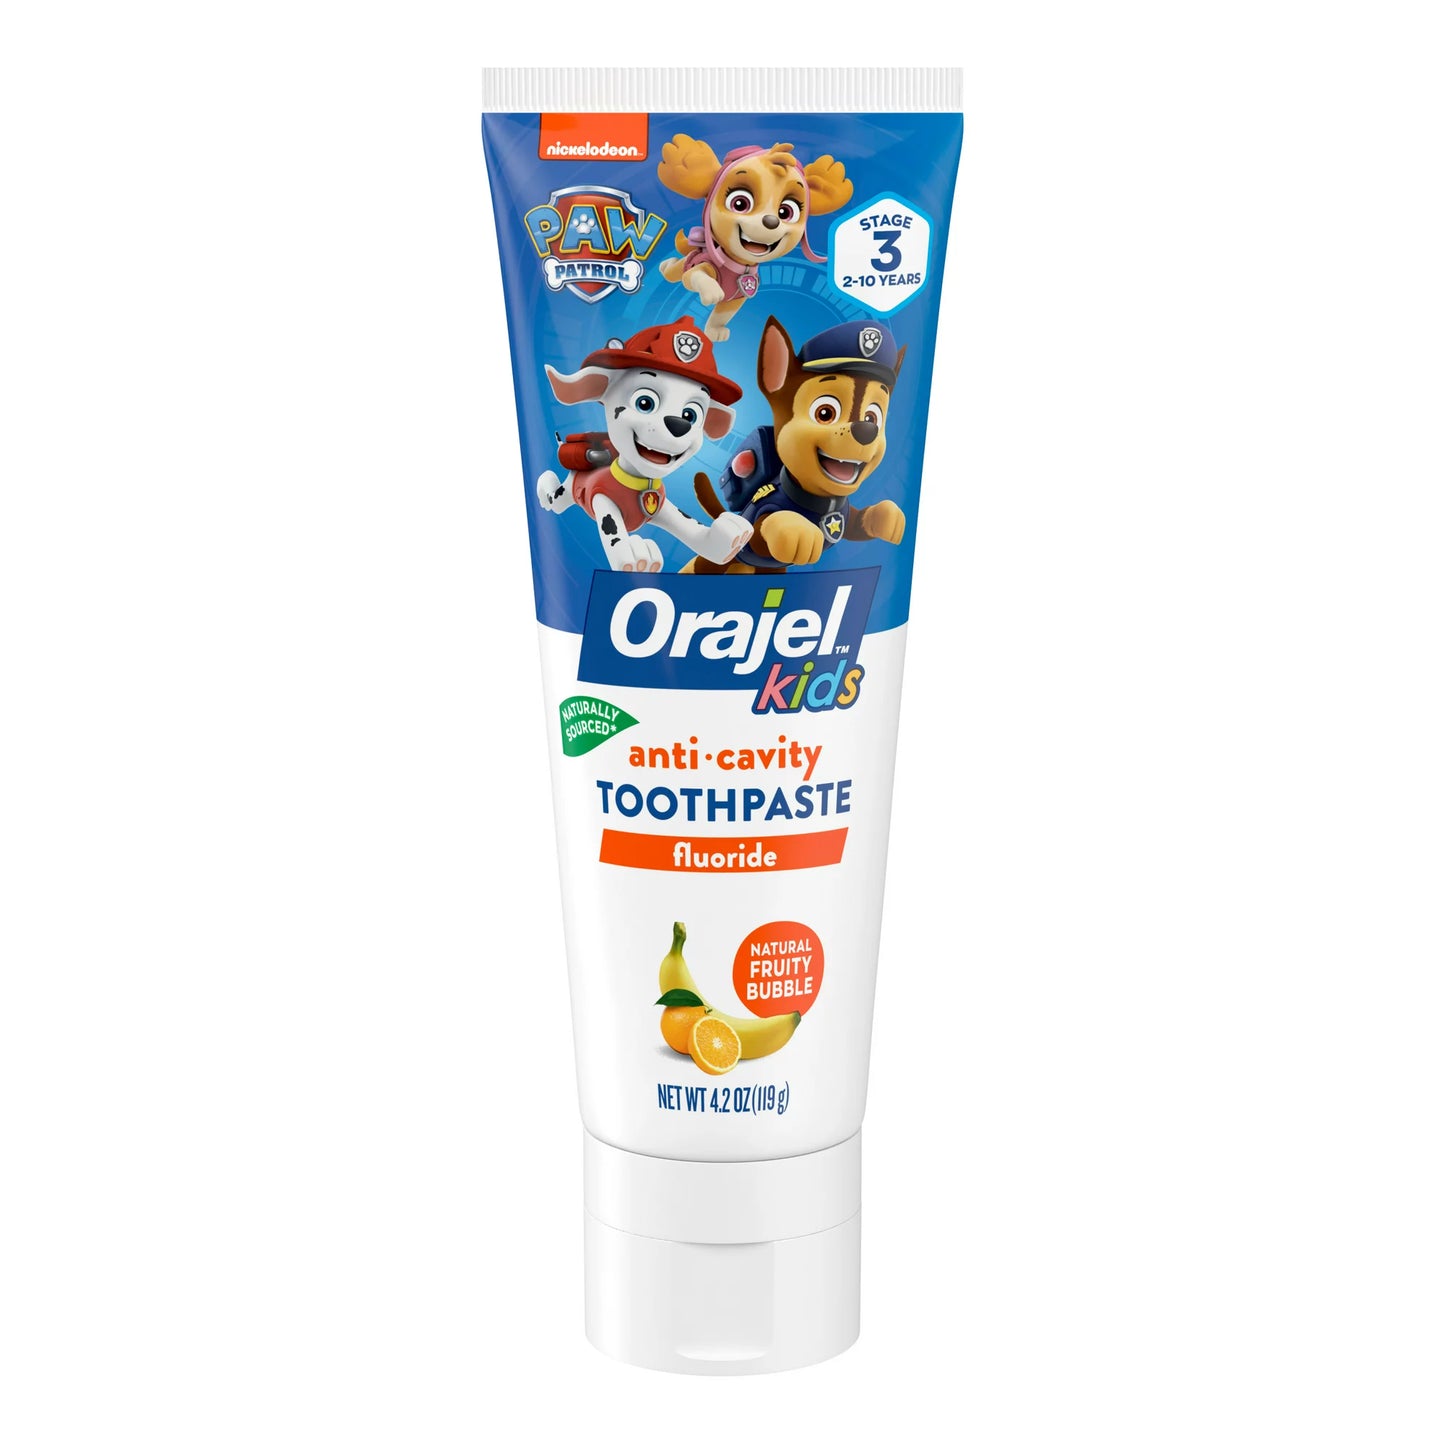 Orajel Kids Paw Patrol Anti-Cavity Fluoride Toothpaste Natural Fruity Bubble Flavor, 4.2oz